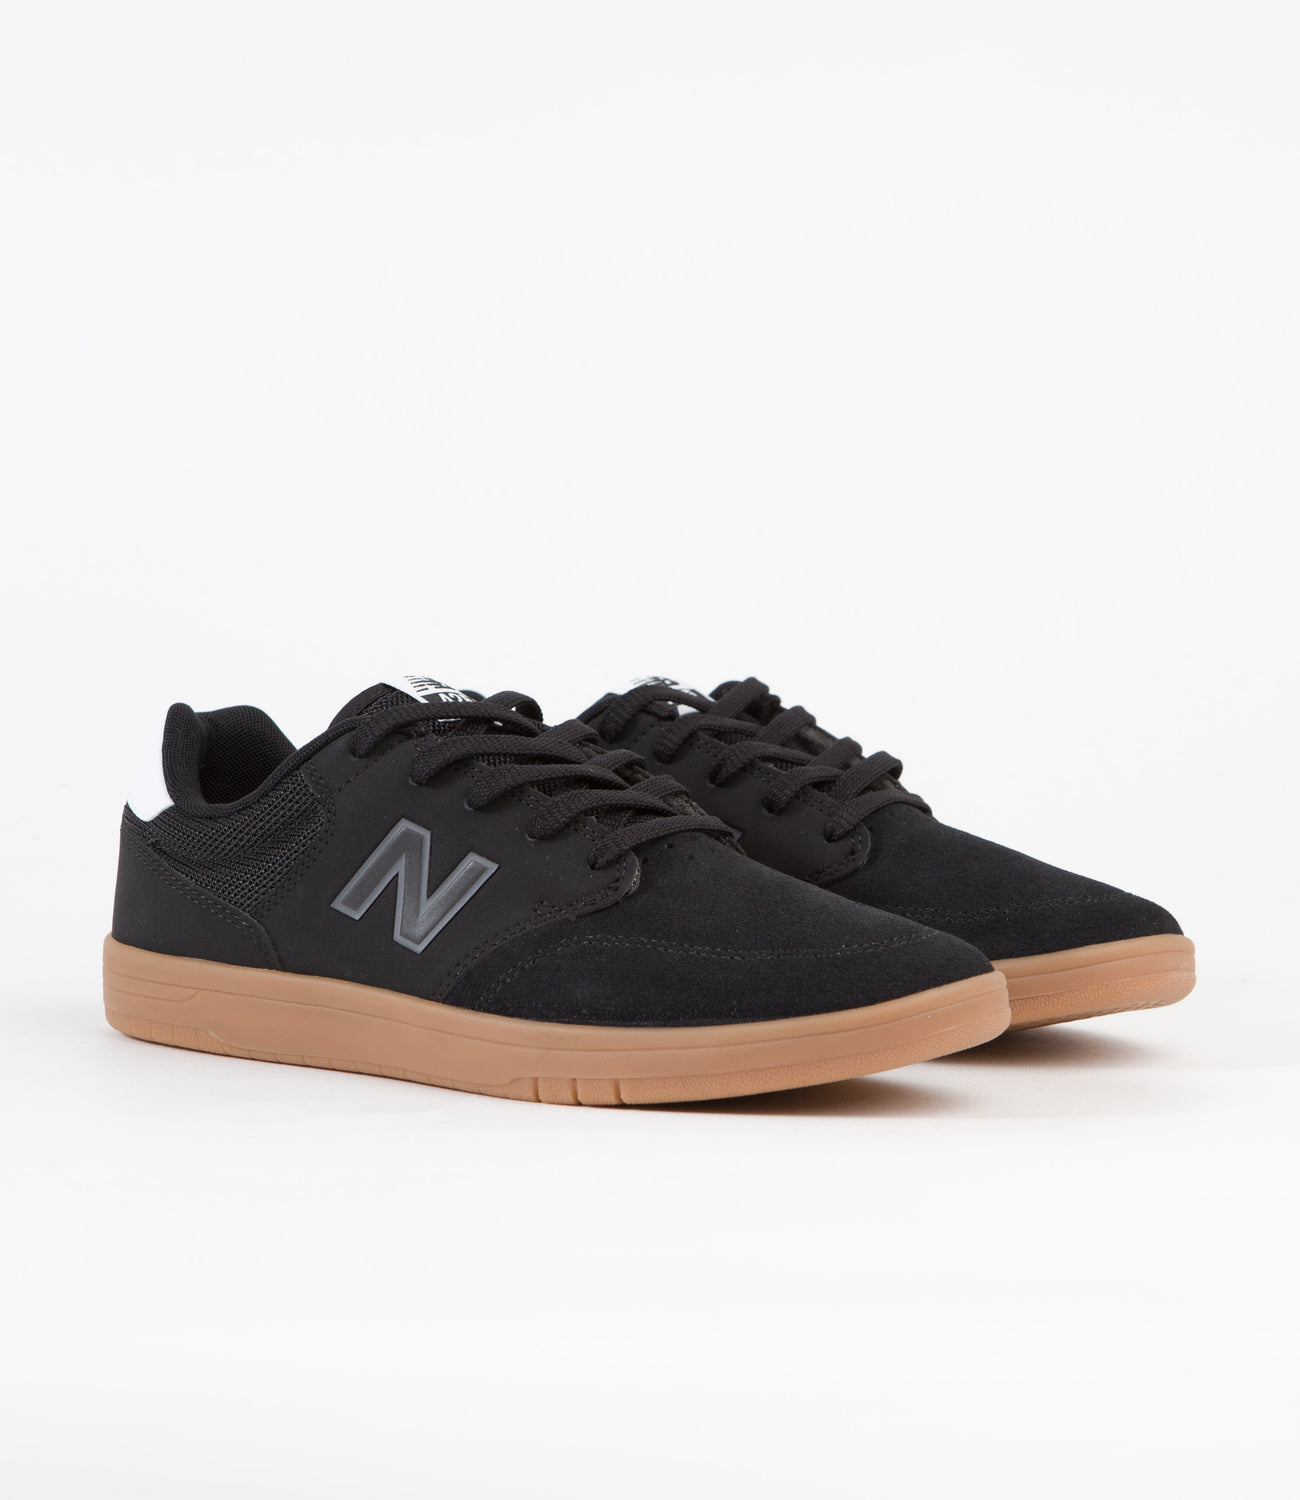 New Balance Numeric 425 Shoes - Black / Gum | Flatspot